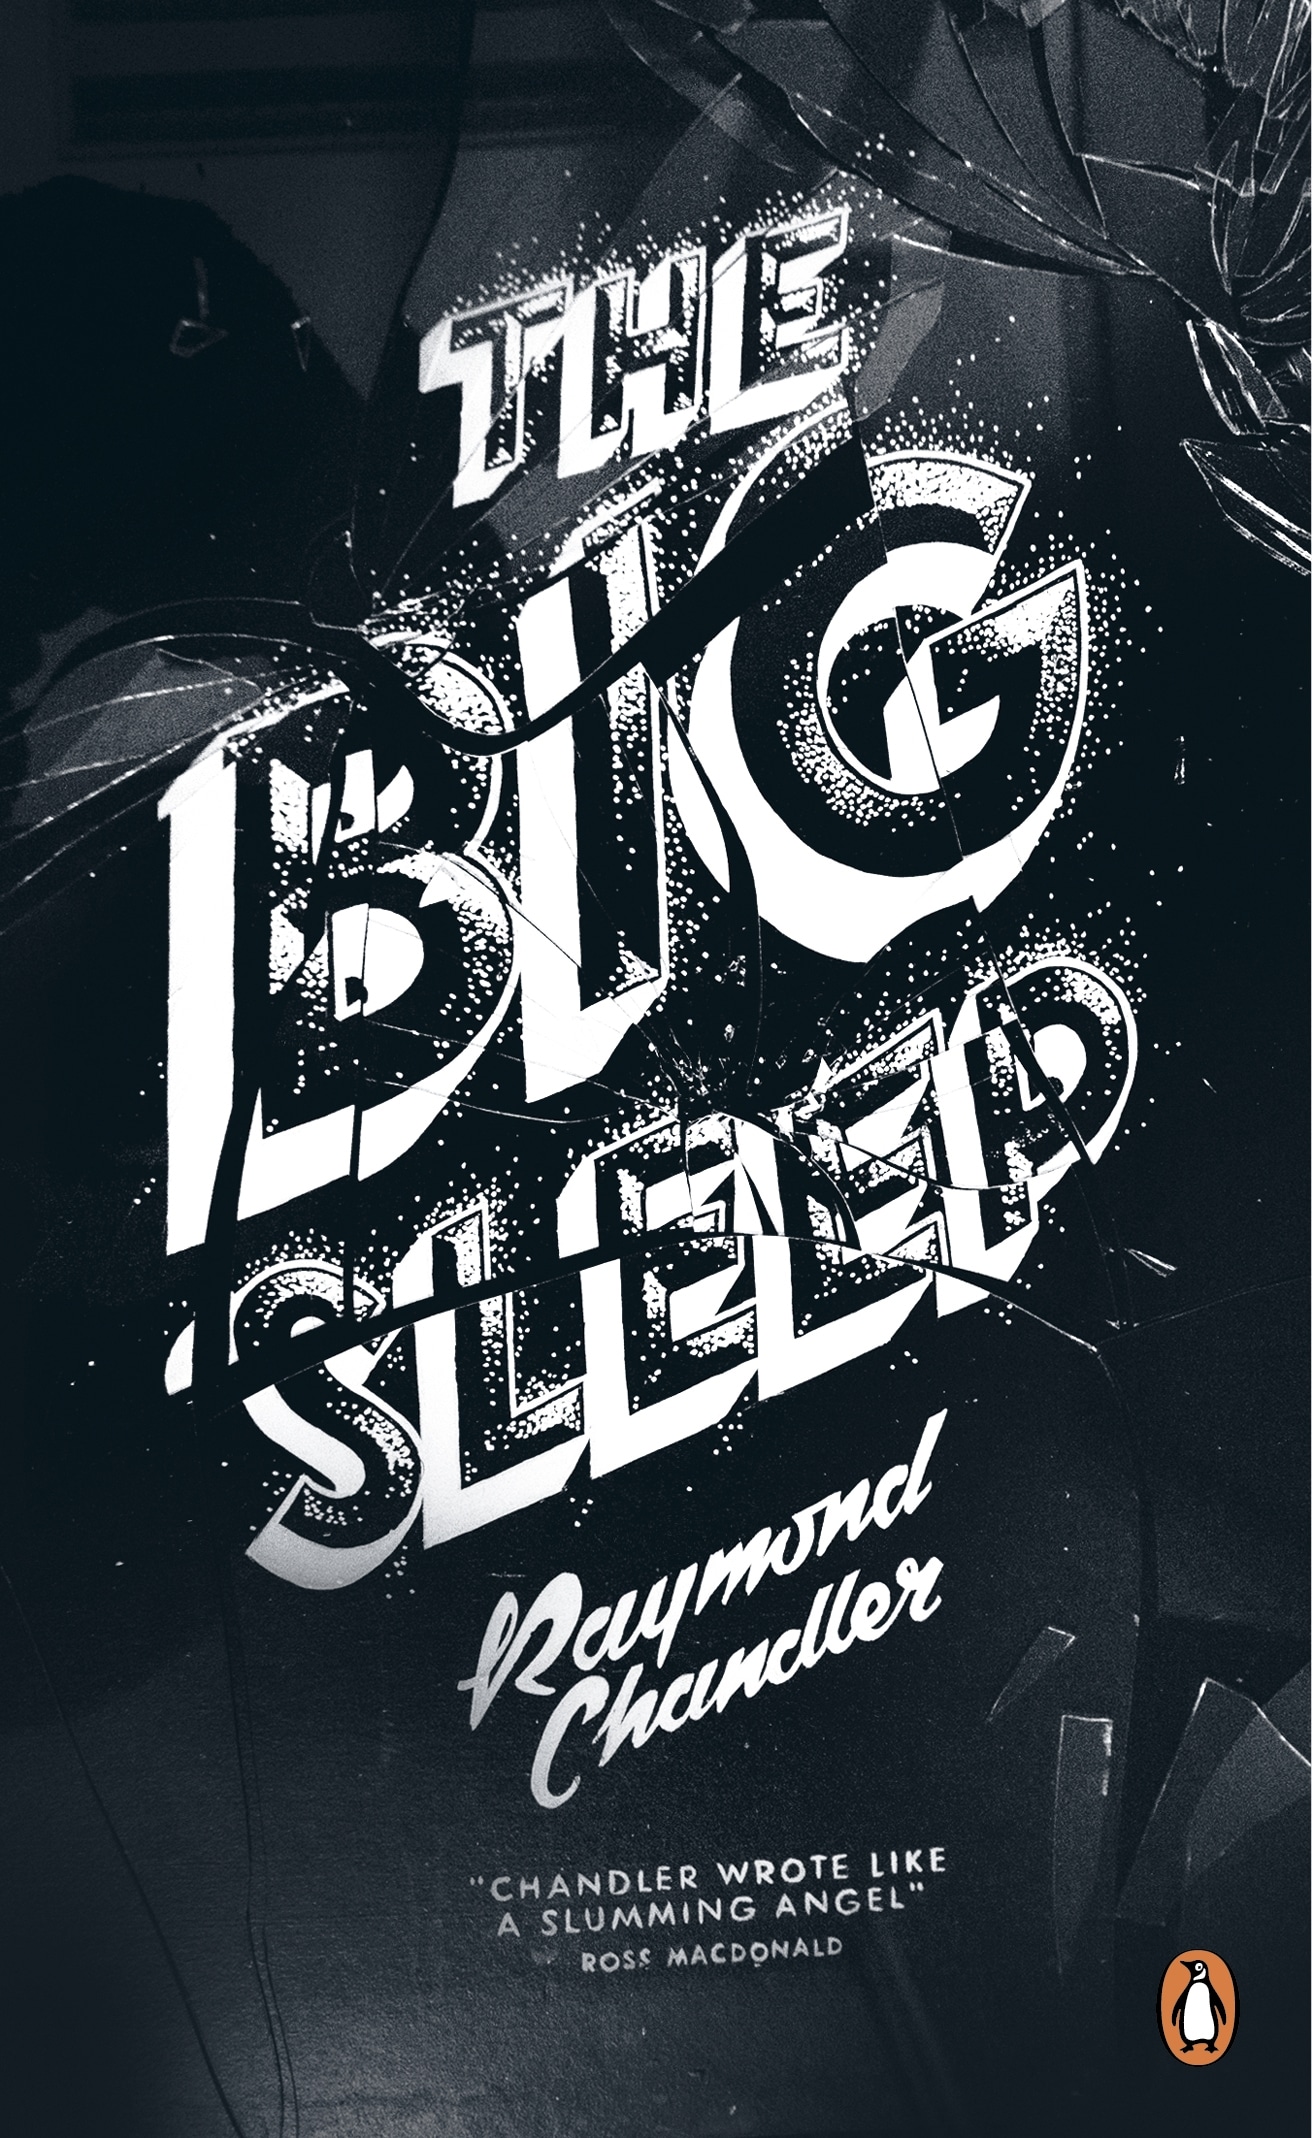 Book “The Big Sleep” by Raymond Chandler, Ian Rankin — August 14, 2014